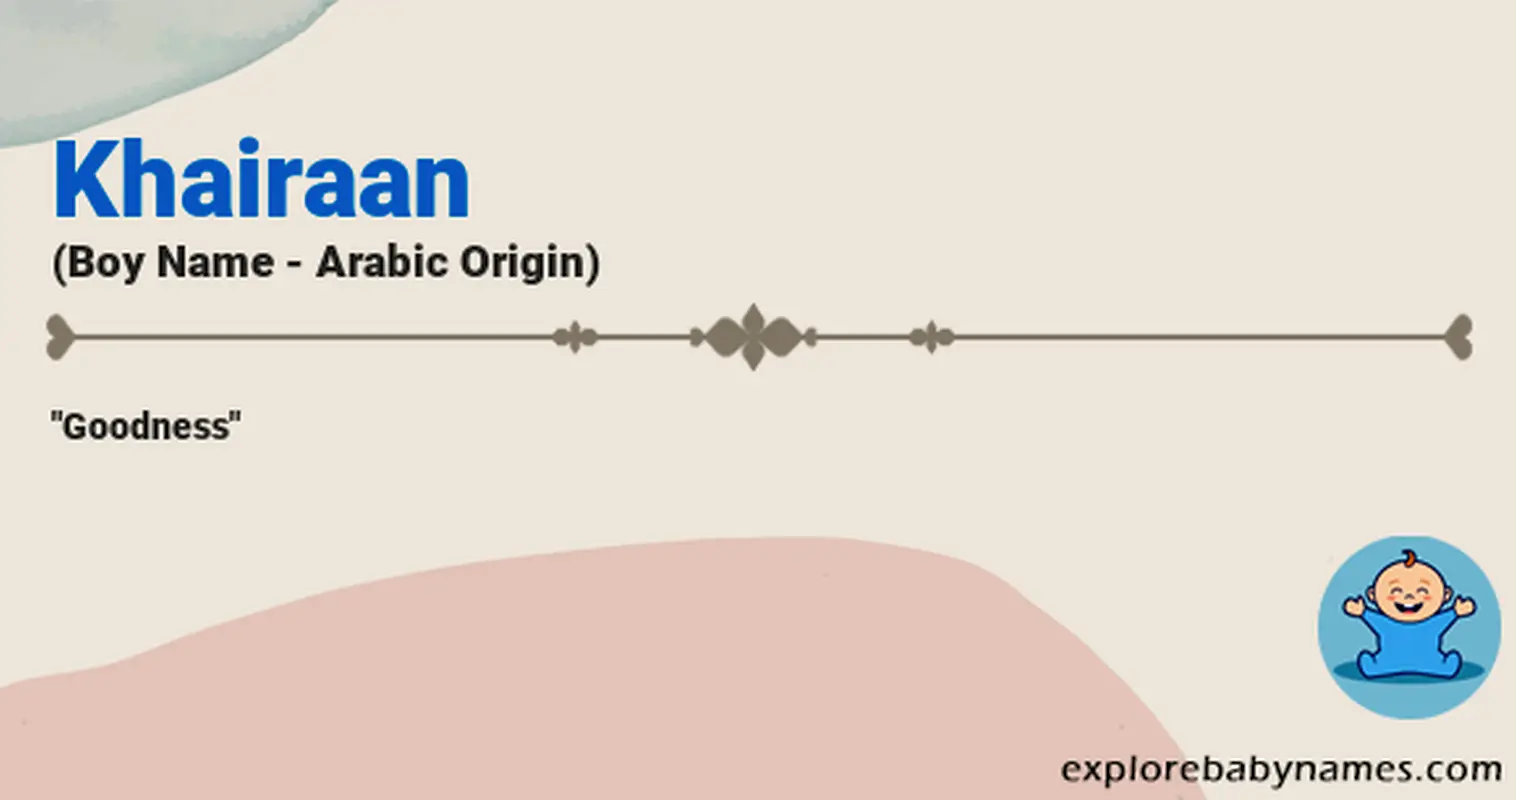 Meaning of Khairaan